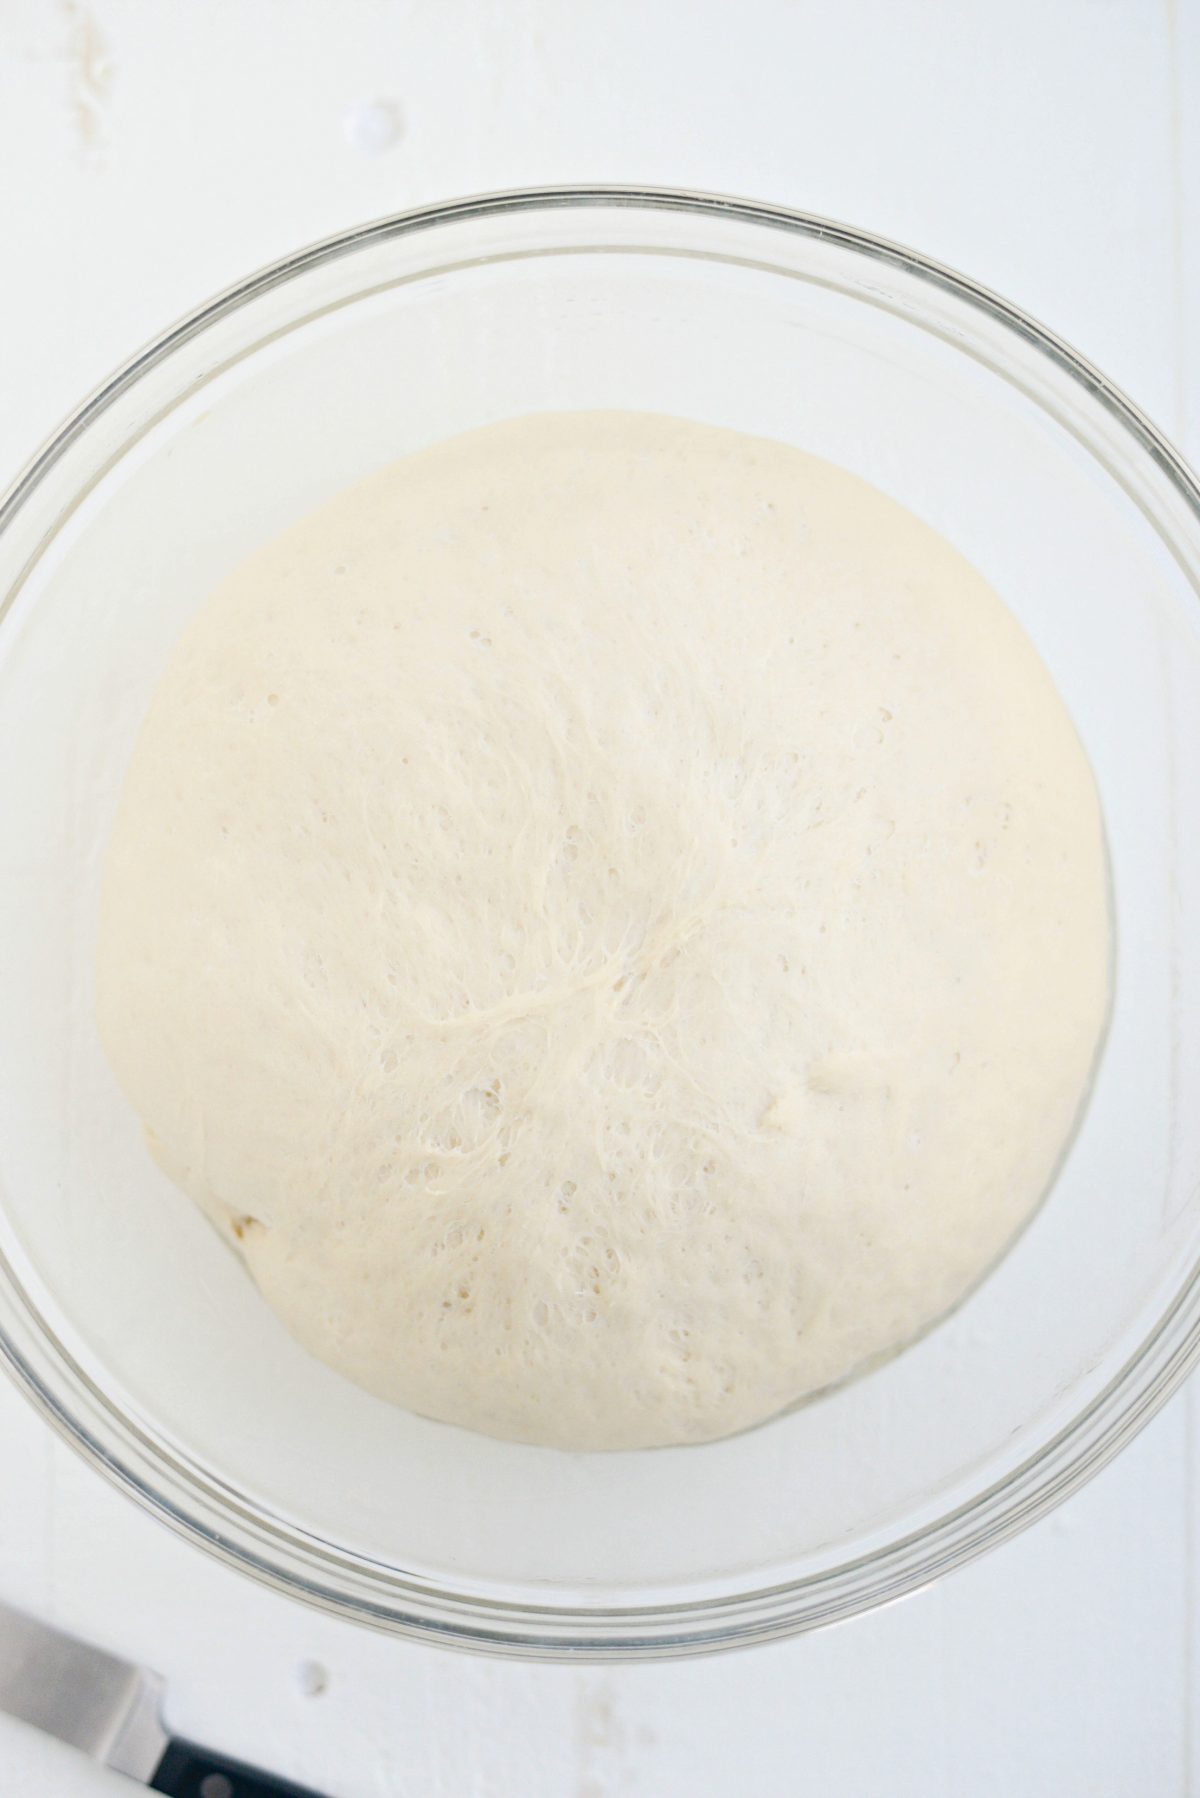 risen dough